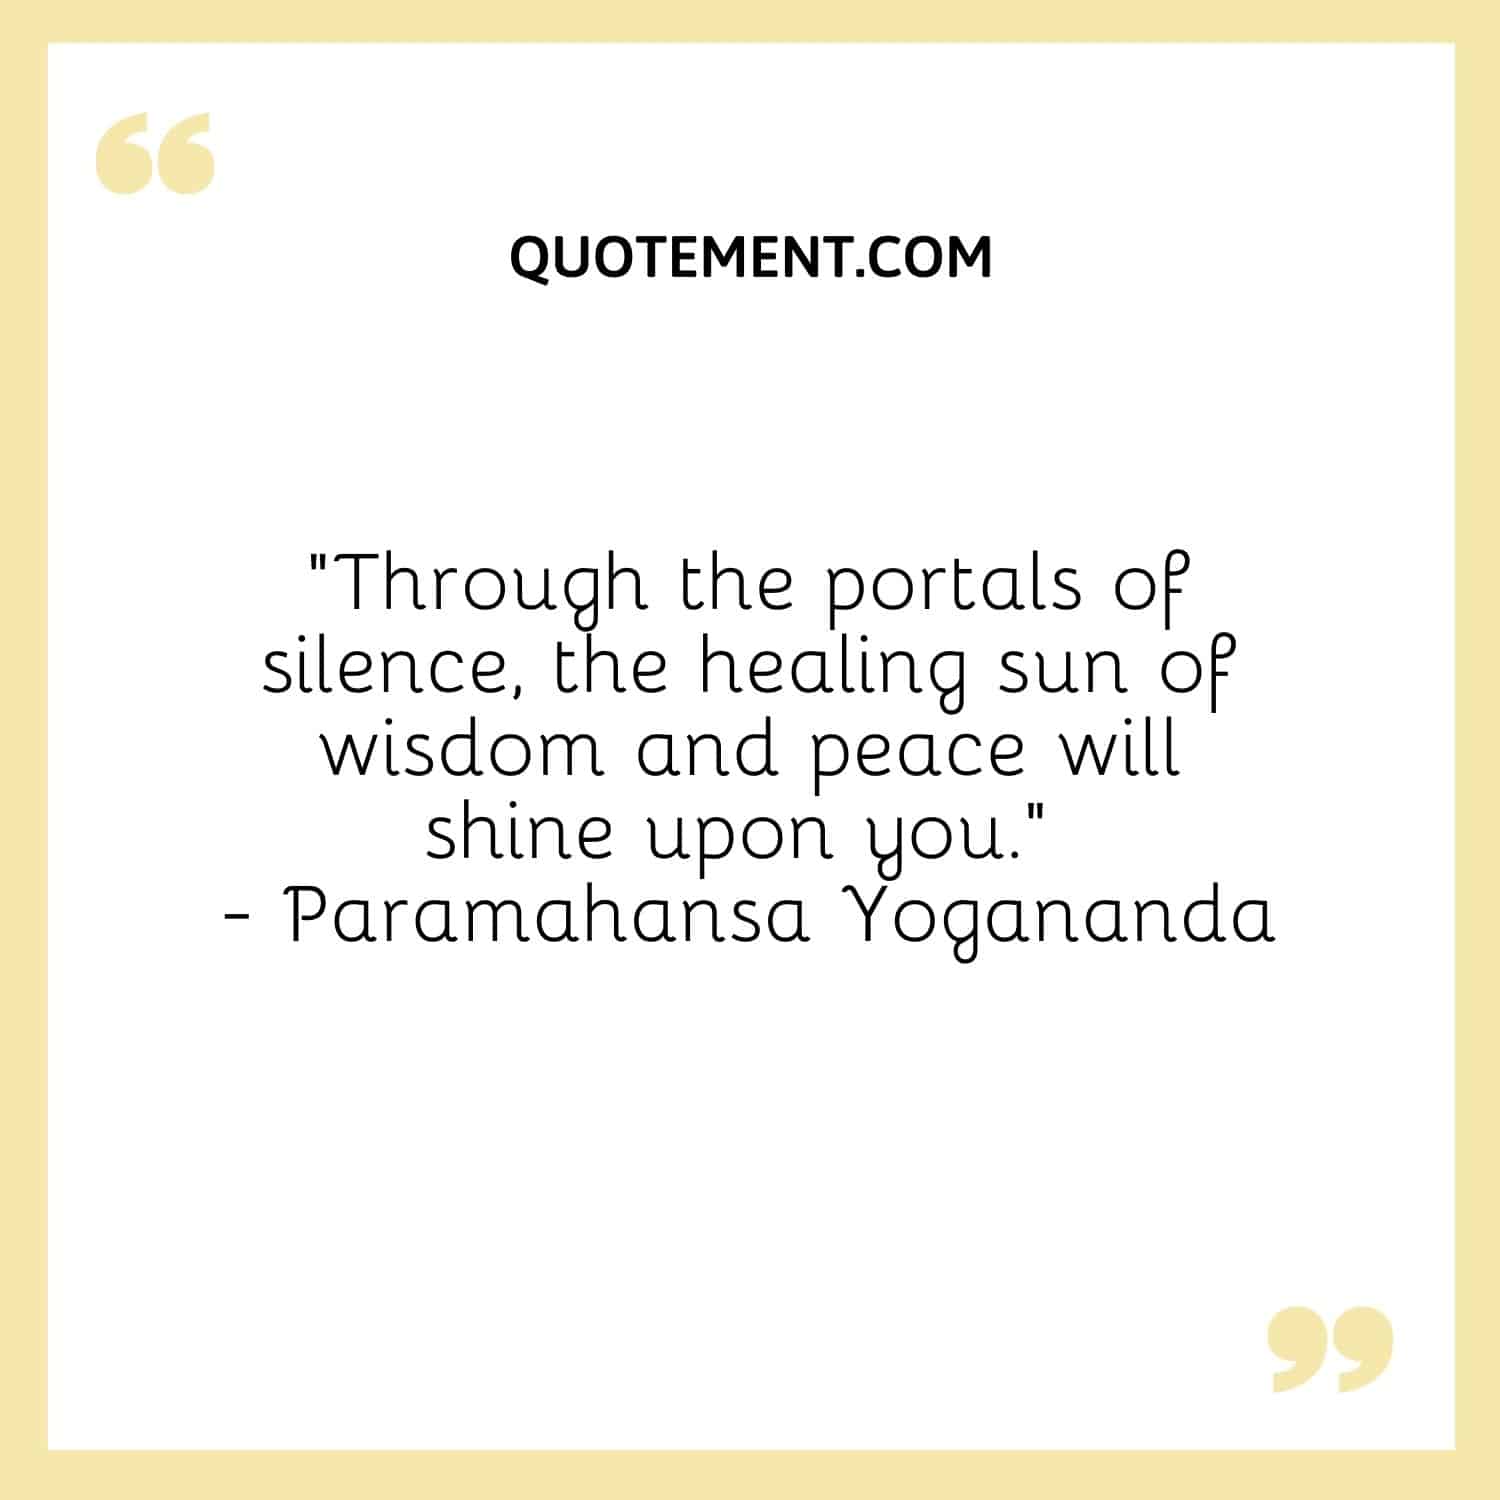 “Through the portals of silence, the healing sun of wisdom and peace will shine upon you.” — Paramahansa Yogananda